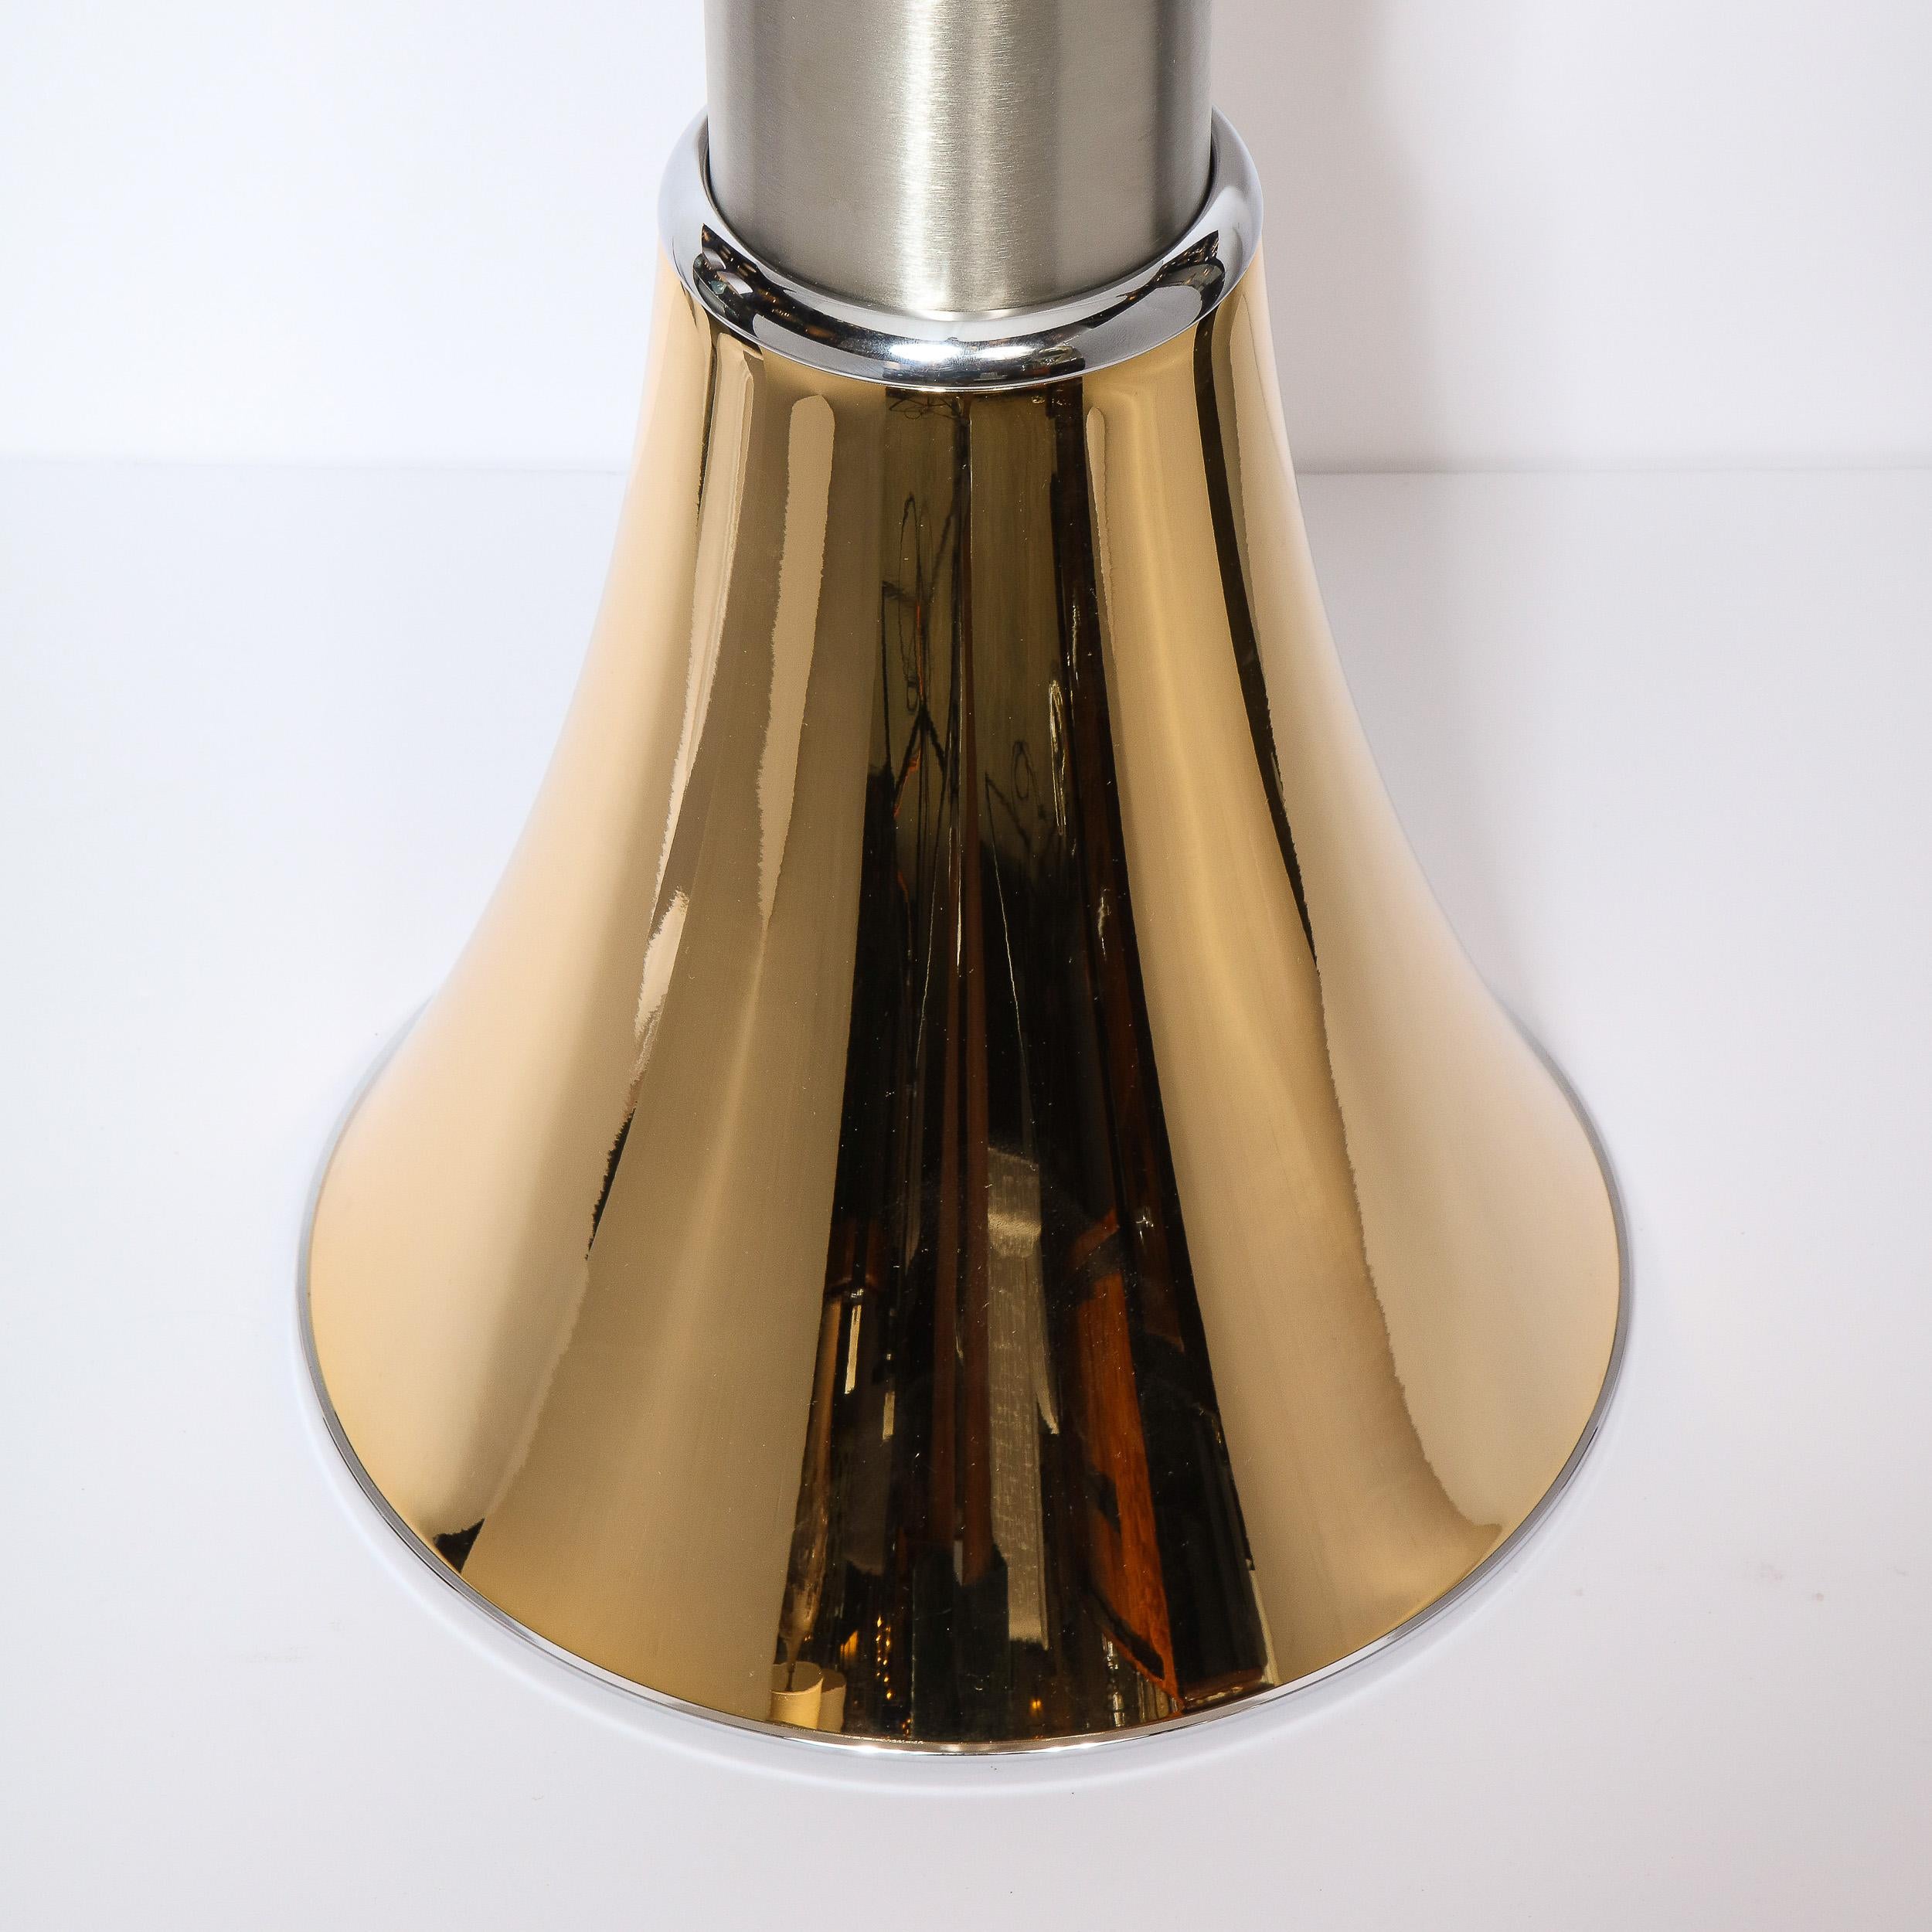 Italian Modernist Pipistrello Brass & Lucite Lamp by Gae Aulenti for Martinelli Luce